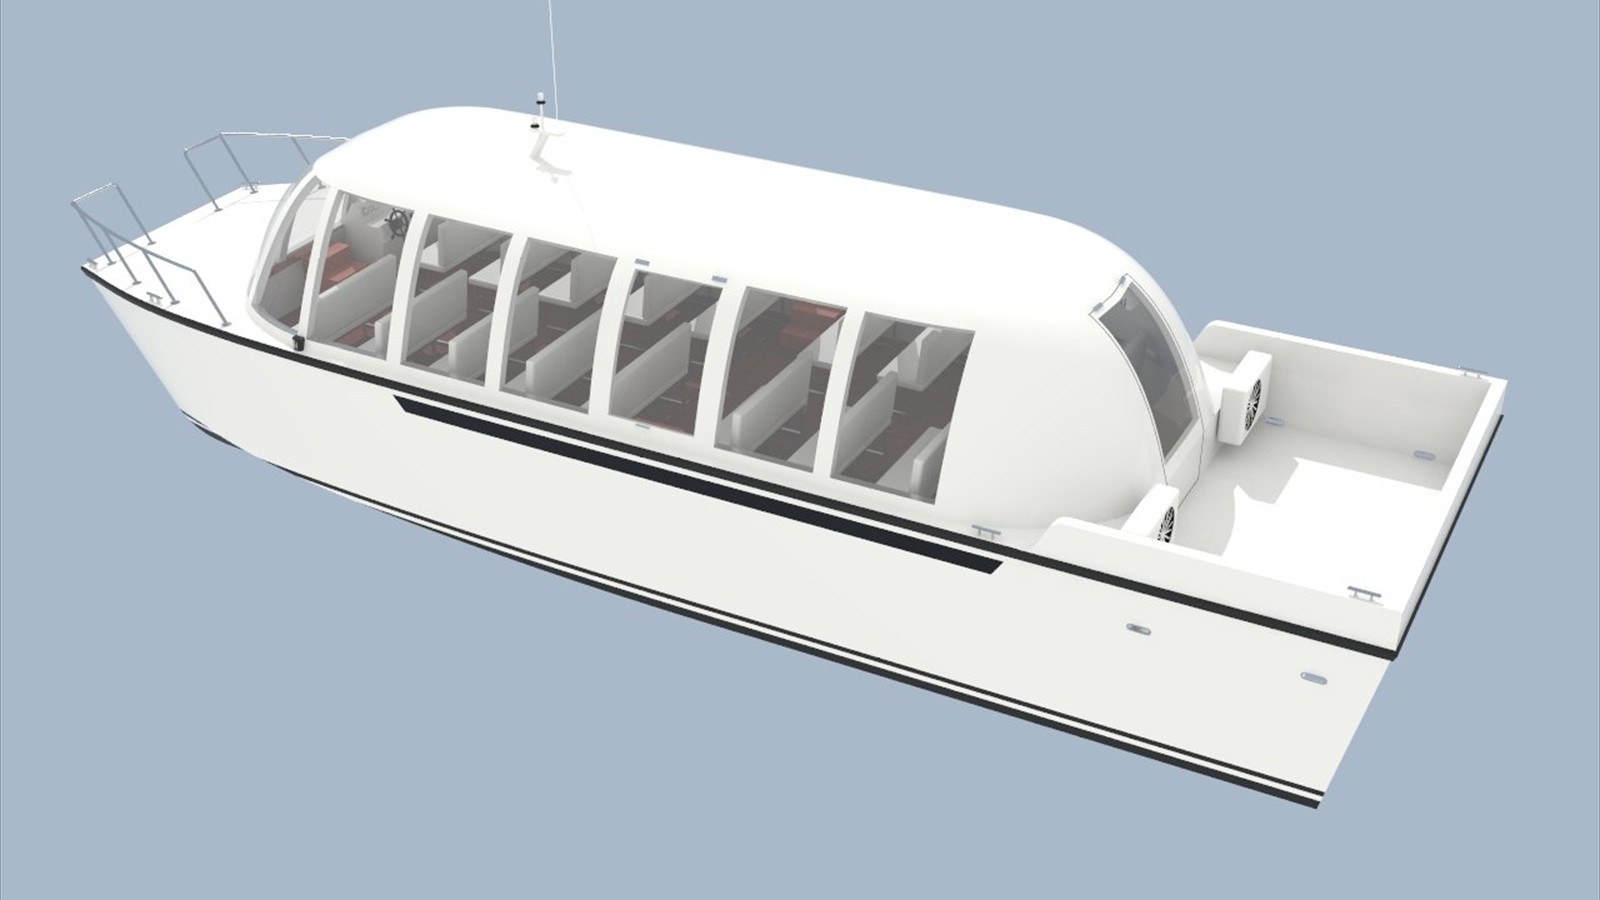 enclosed_cabin_catamaran_watertaxi_7